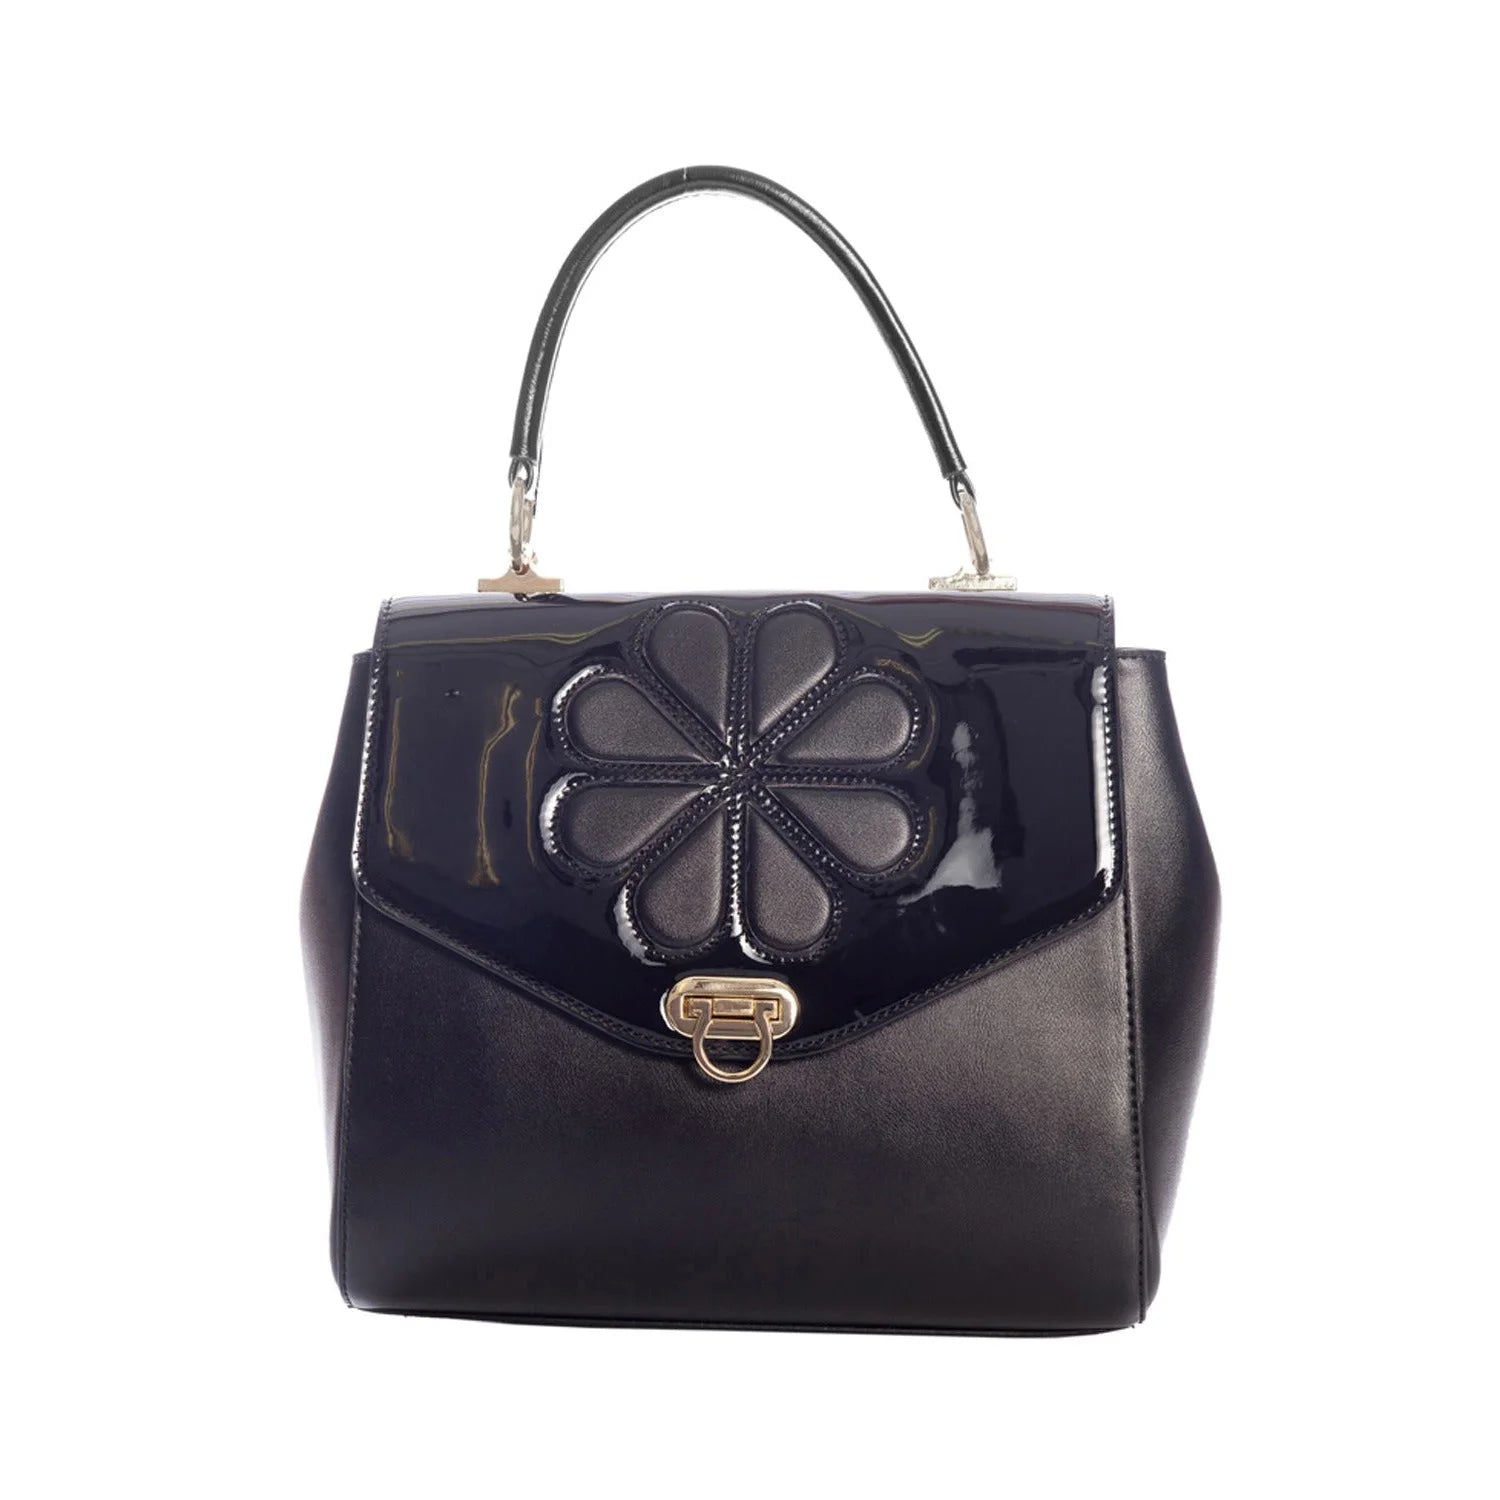 Black Waterlily Handbag